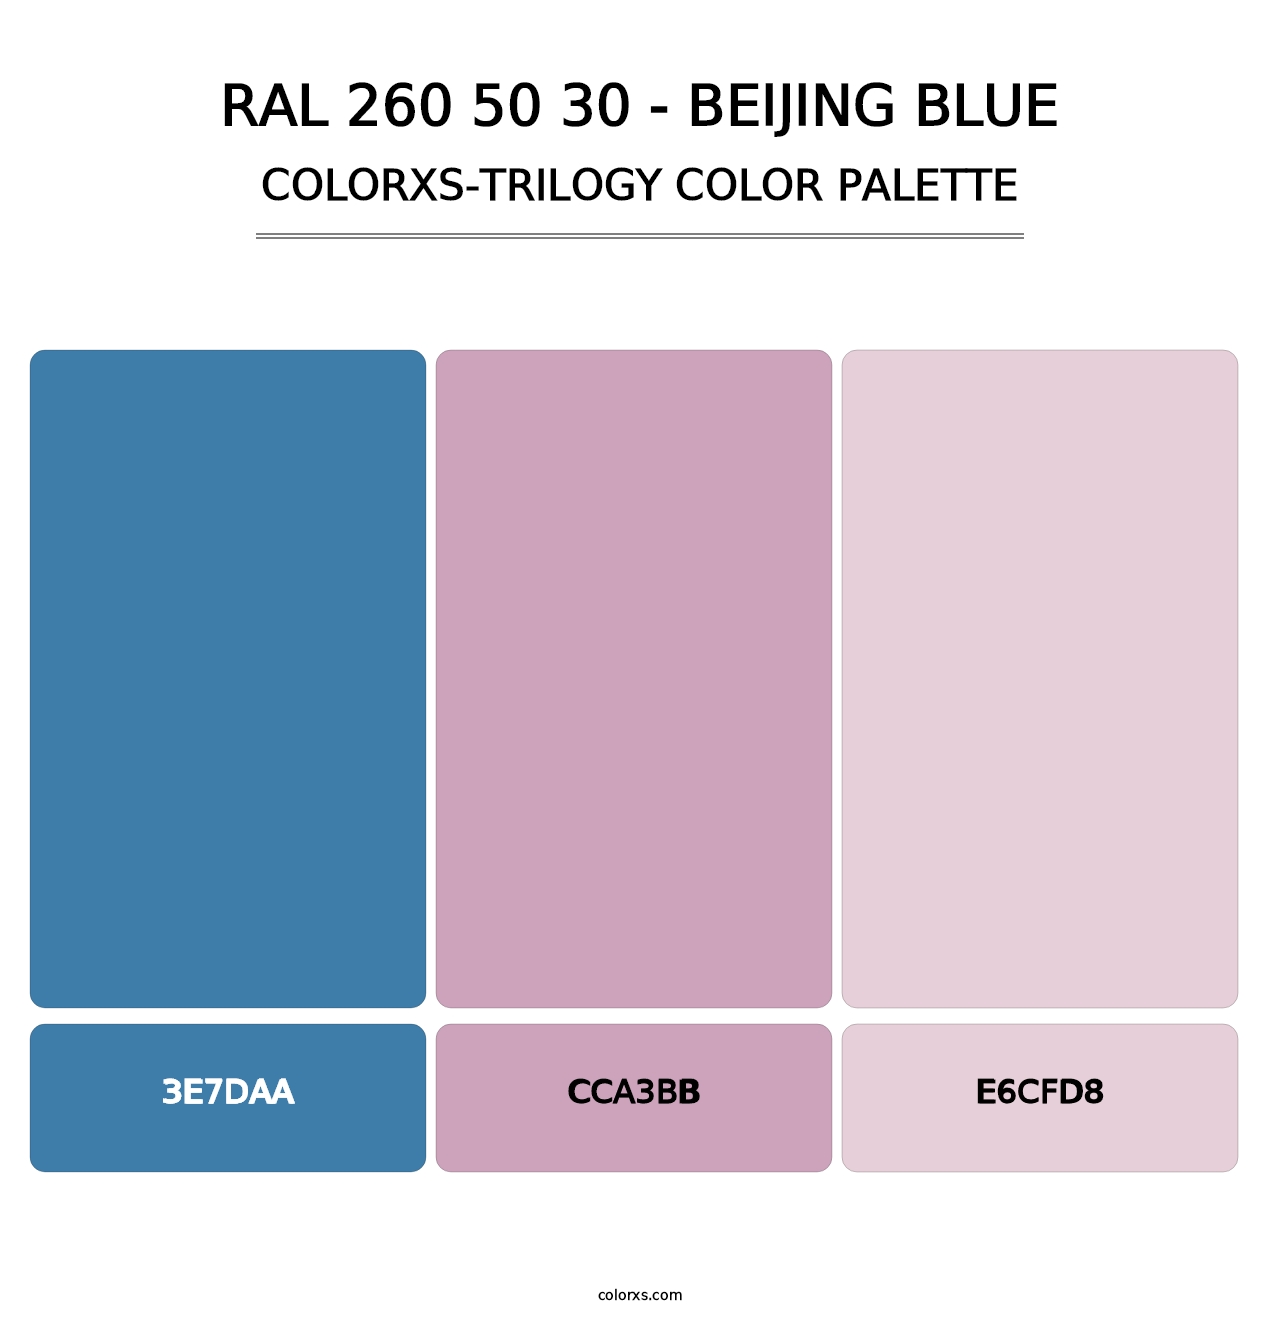 RAL 260 50 30 - Beijing Blue - Colorxs Trilogy Palette